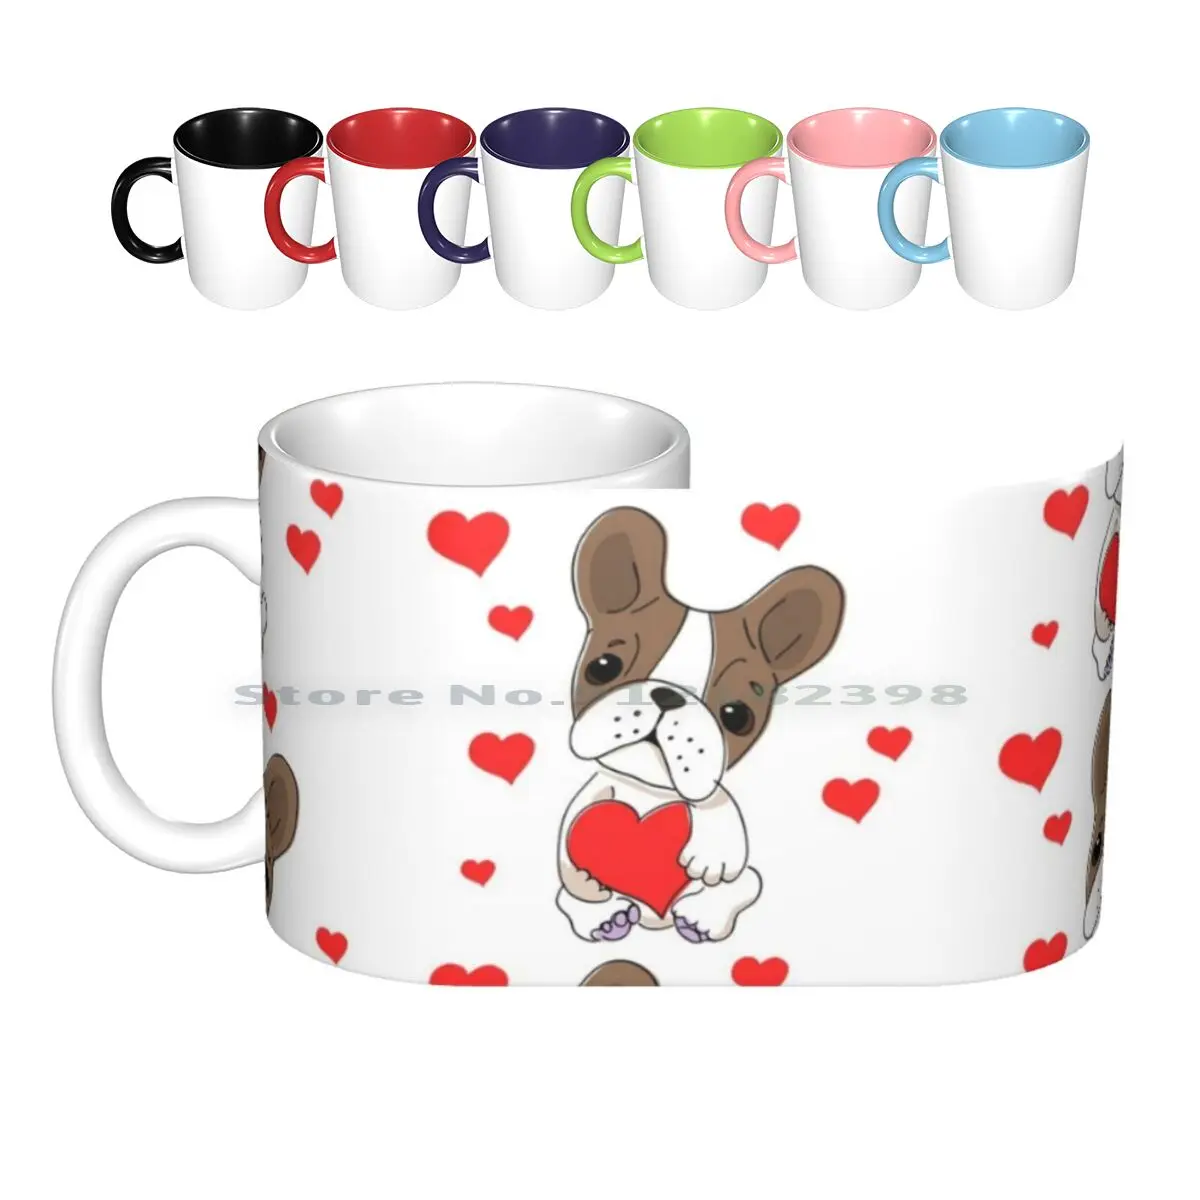 Pugs With Heart Ceramic Mugs Coffee Cups Milk Tea Mug Heart Hearts Pug Valentine Dog Dogs Funny Cute Popular February 14 Cool